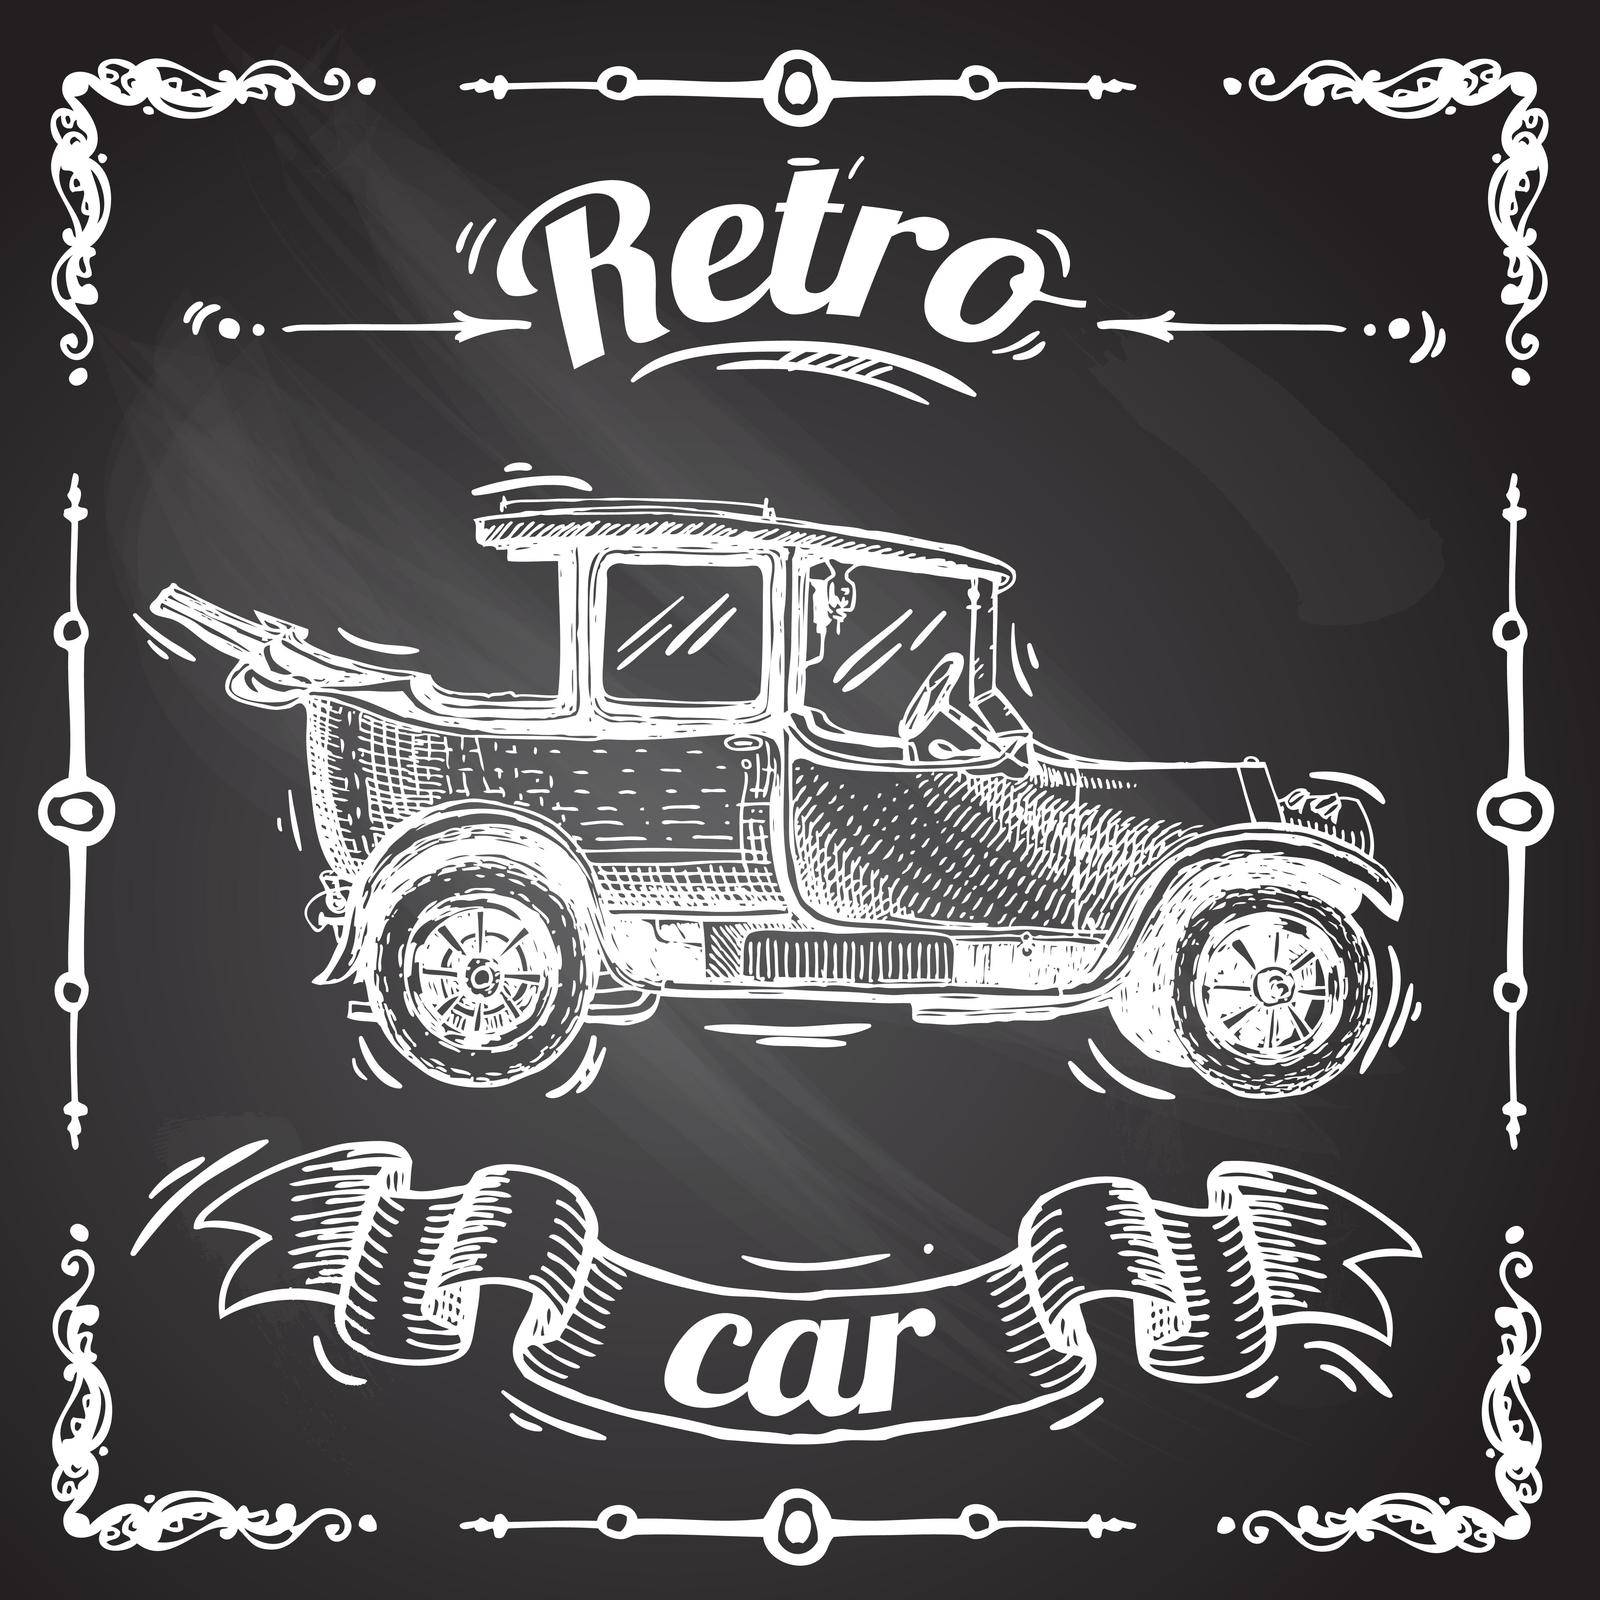 beautiful hand- drawn illustration retro car sketch on the chalkboard